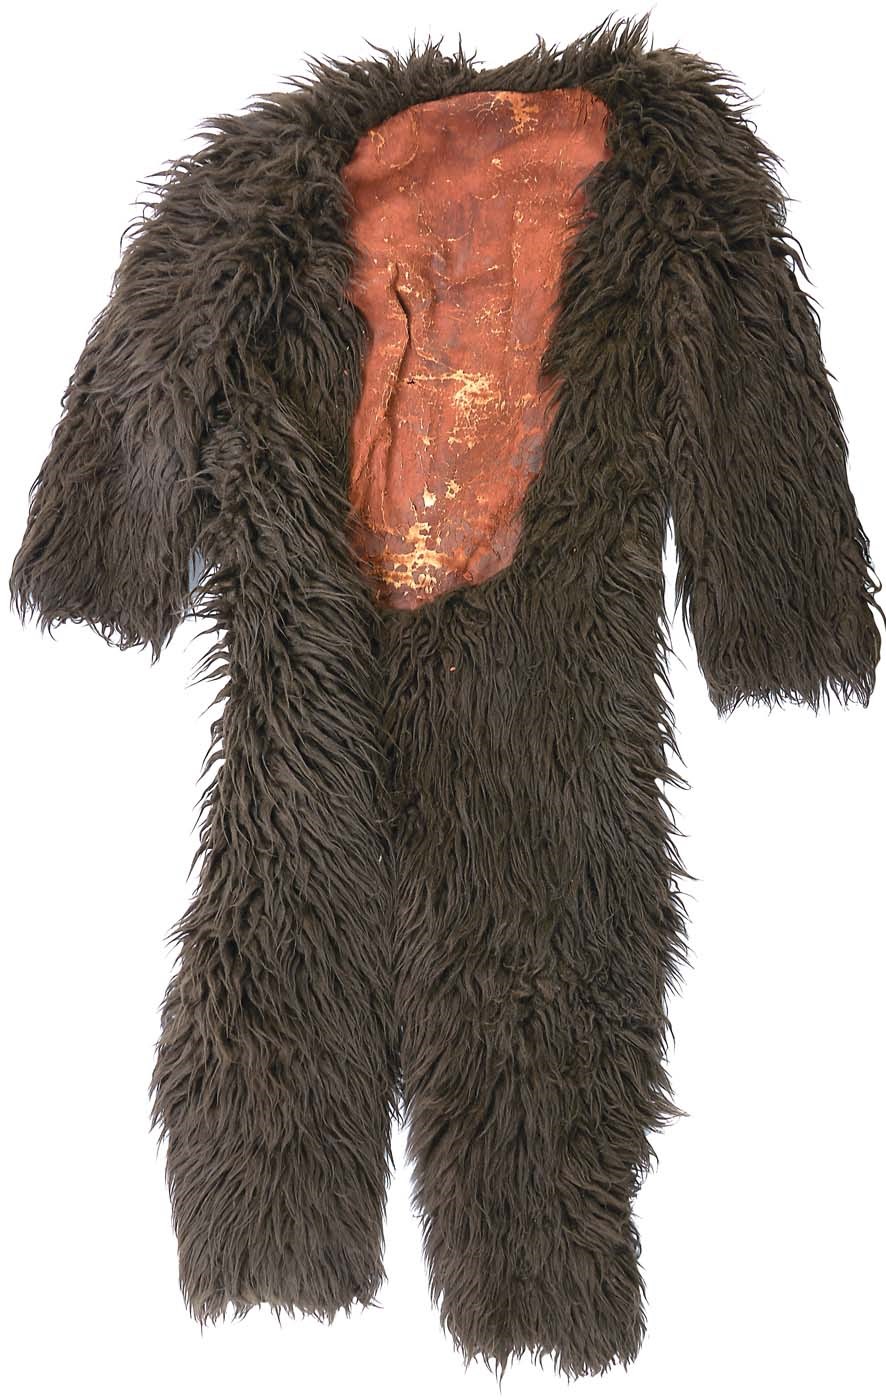 - 1970s Gerela's Gorilla Costume Worn by Bob Bubanic - Founder of "Gerela's Gorillas" (Bubanic LOA & Photo Documentation)